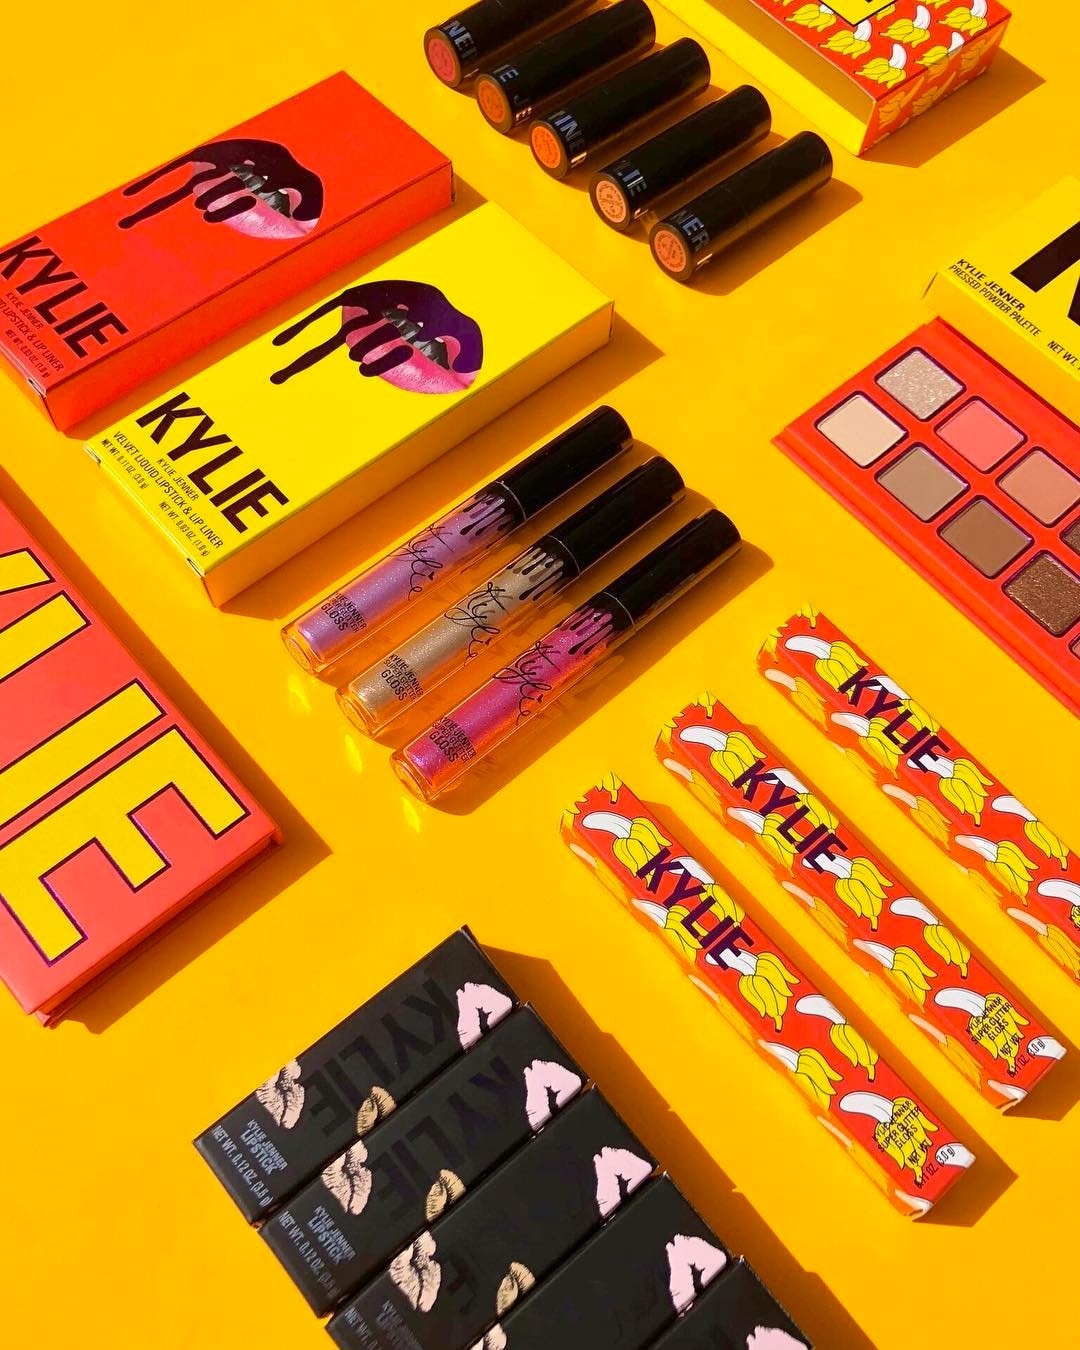 kylie cosmetics jenner summer makeup collection restock lipgloss lipstick eye shadow palette lip kit